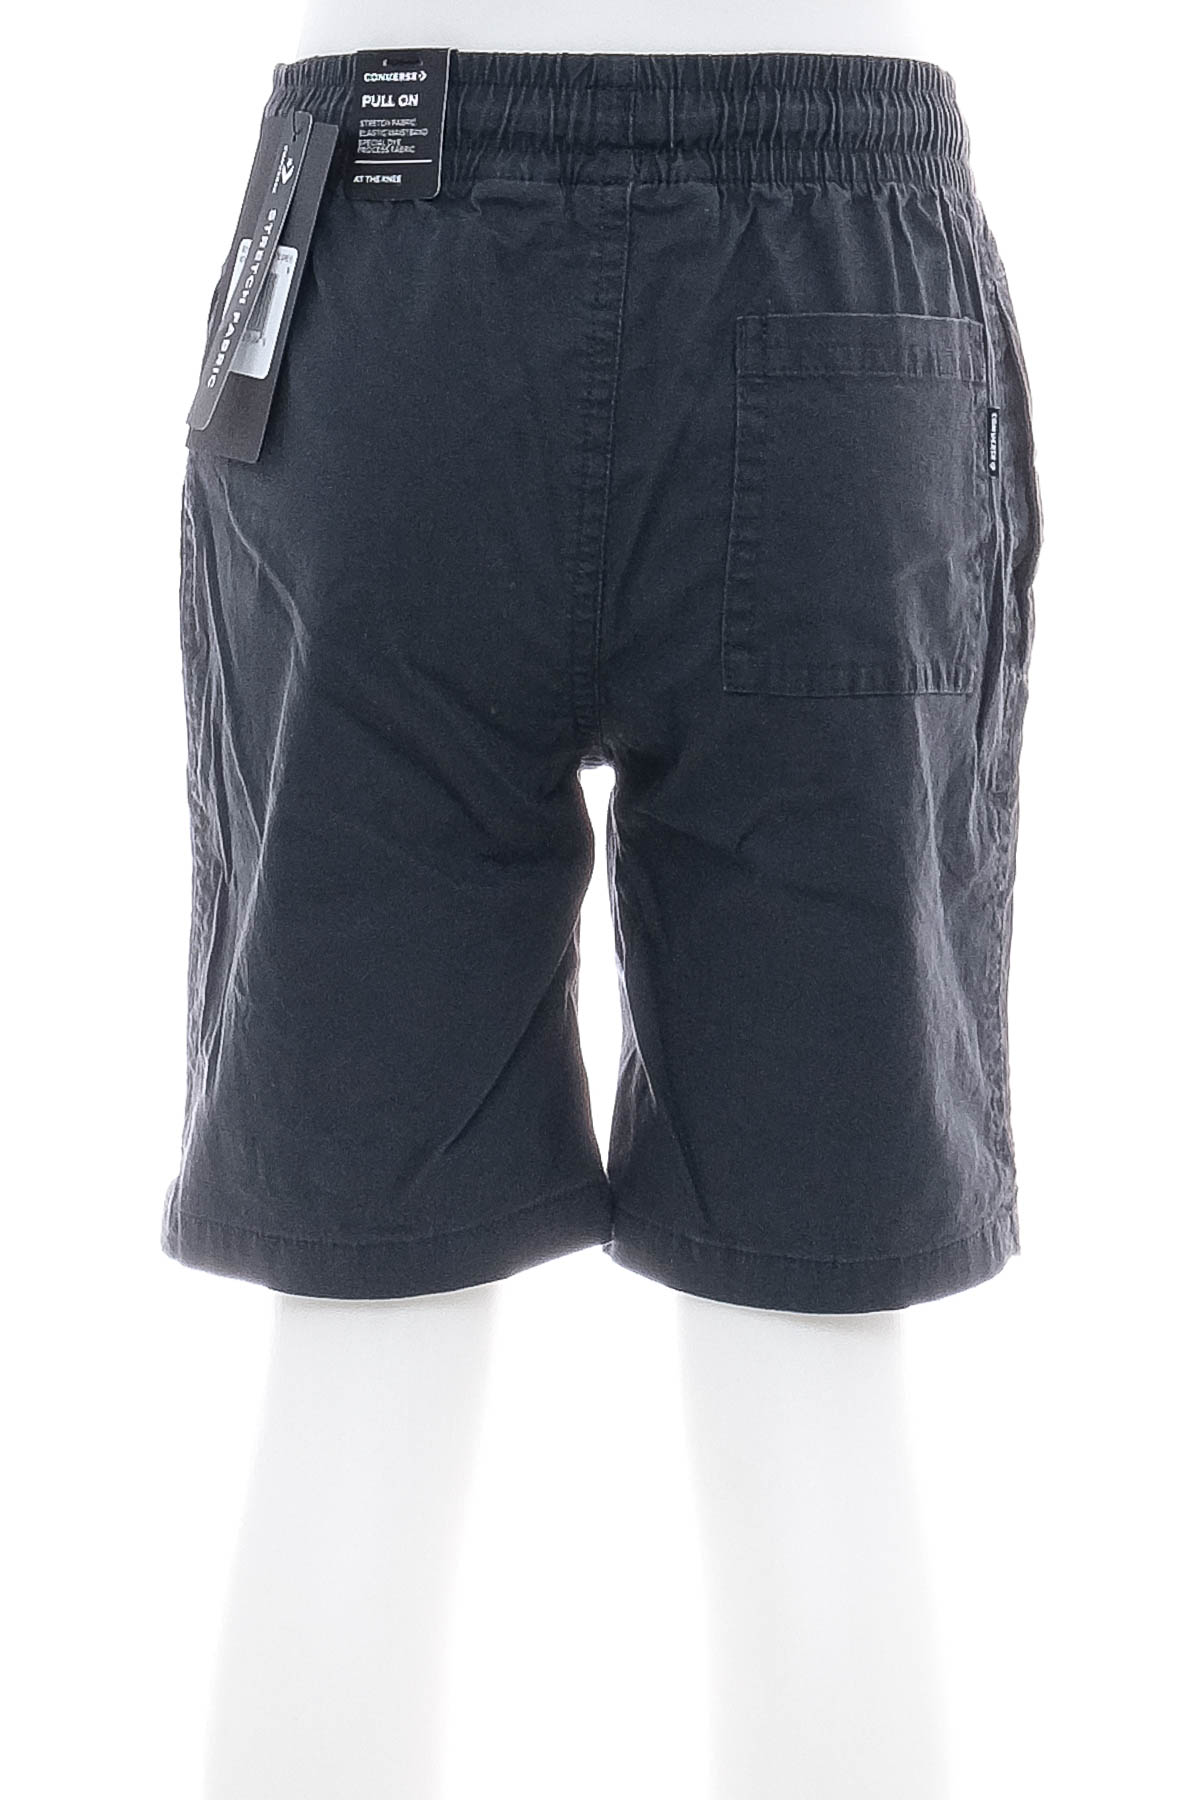 Shorts for boys - Converse - 1